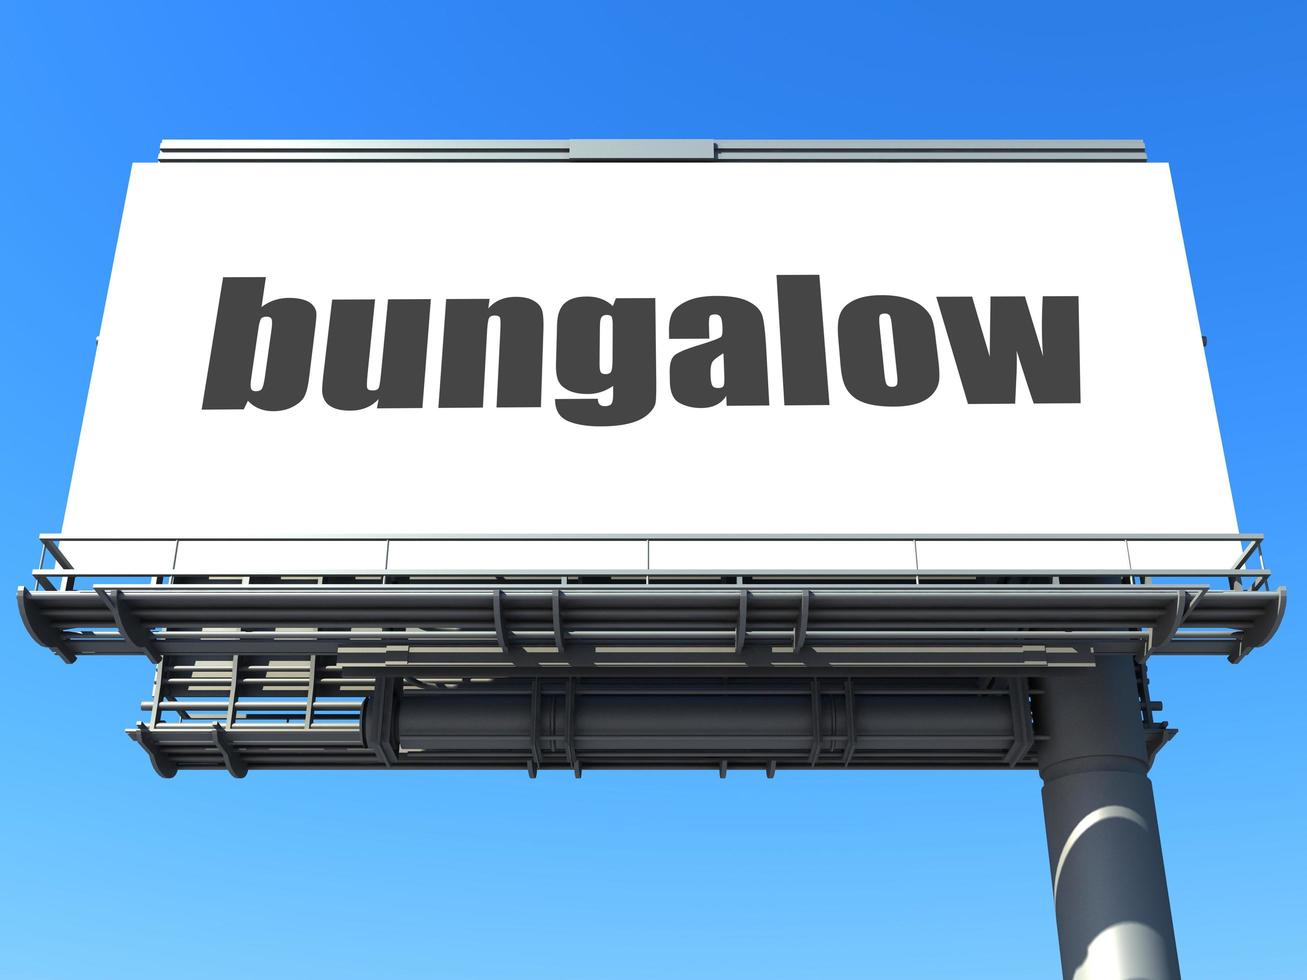 bungalow word on billboard photo